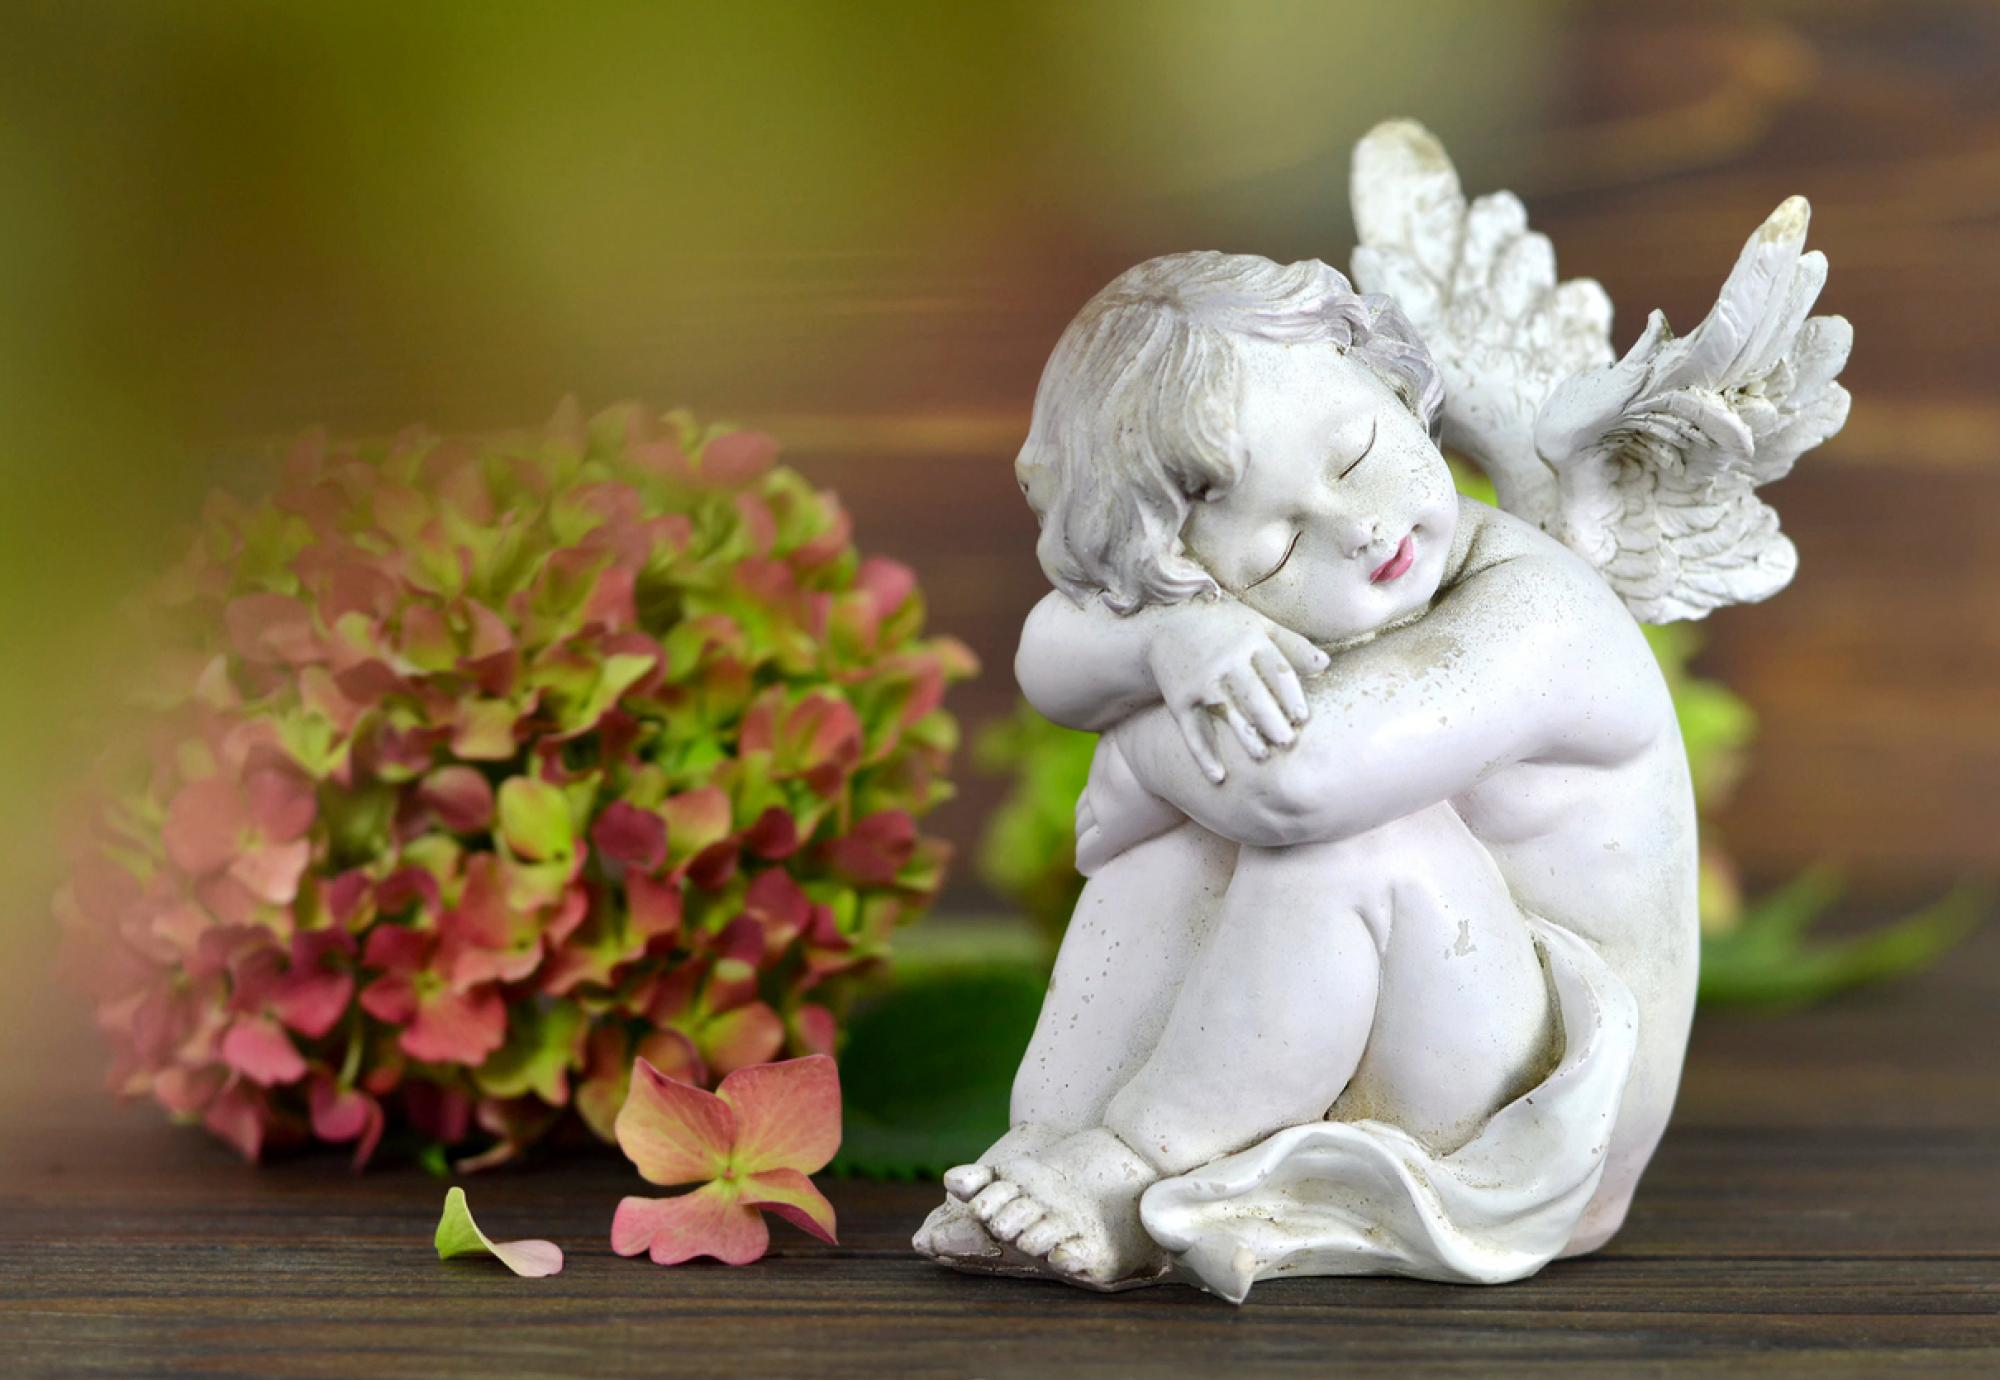 Angel guardian depicting baby loss